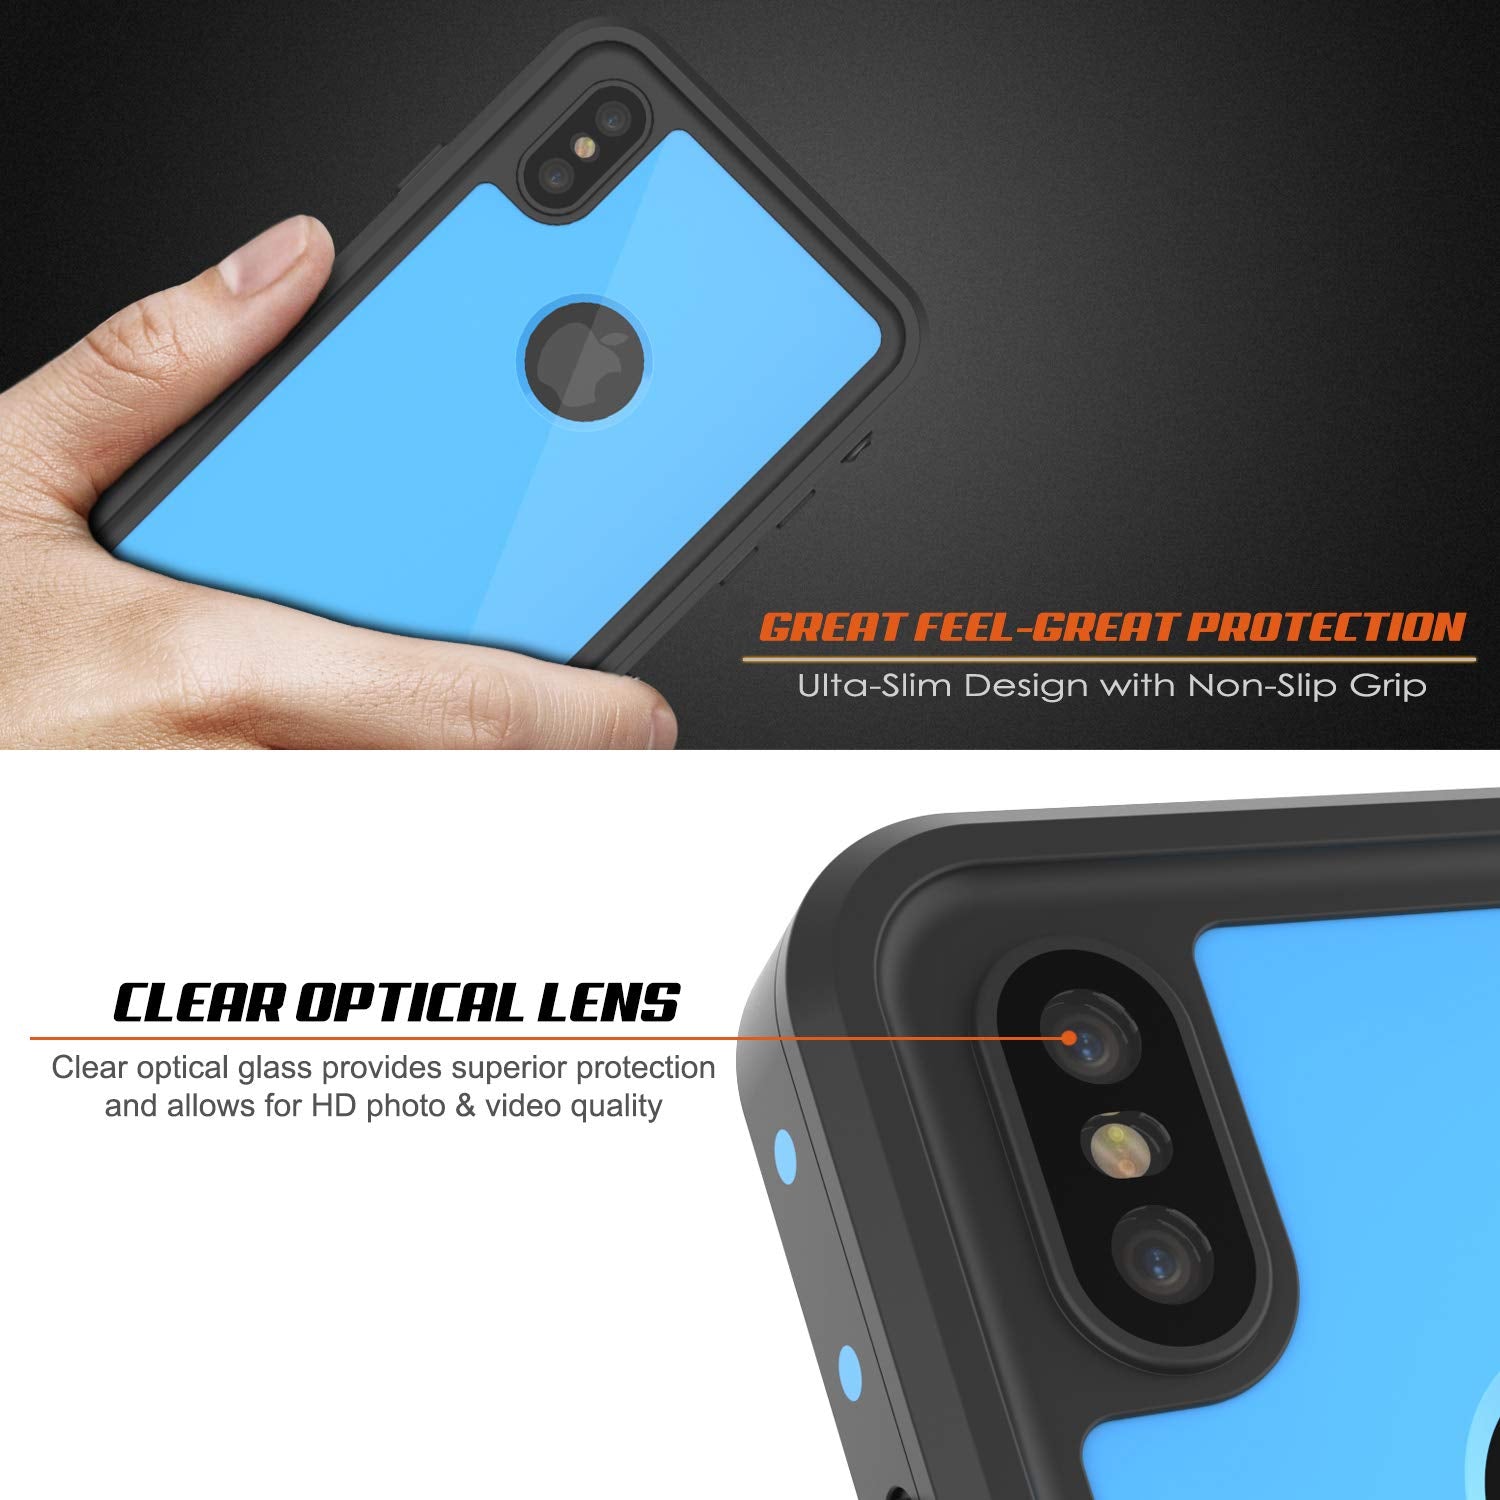 iPhone XS Max Waterproof IP68 Case, Punkcase [Light blue] [StudStar Series] [Slim Fit] [Dirtproof]